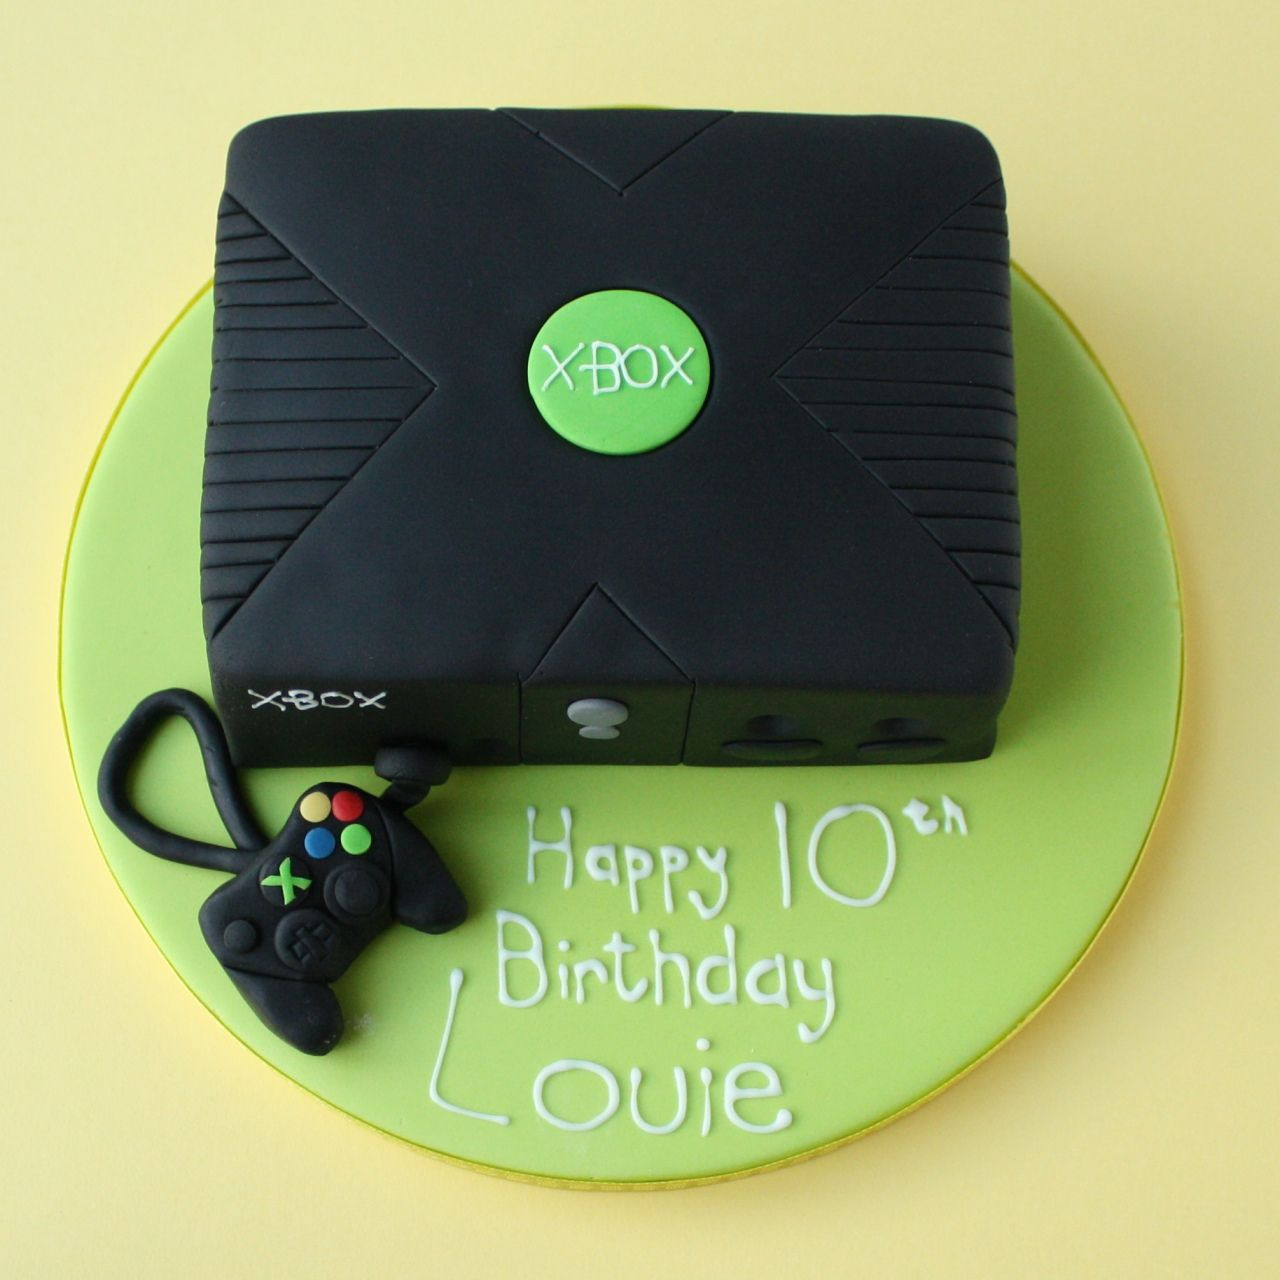 Xbox Birthday Cake
 How to make an easy XBOX CAKE